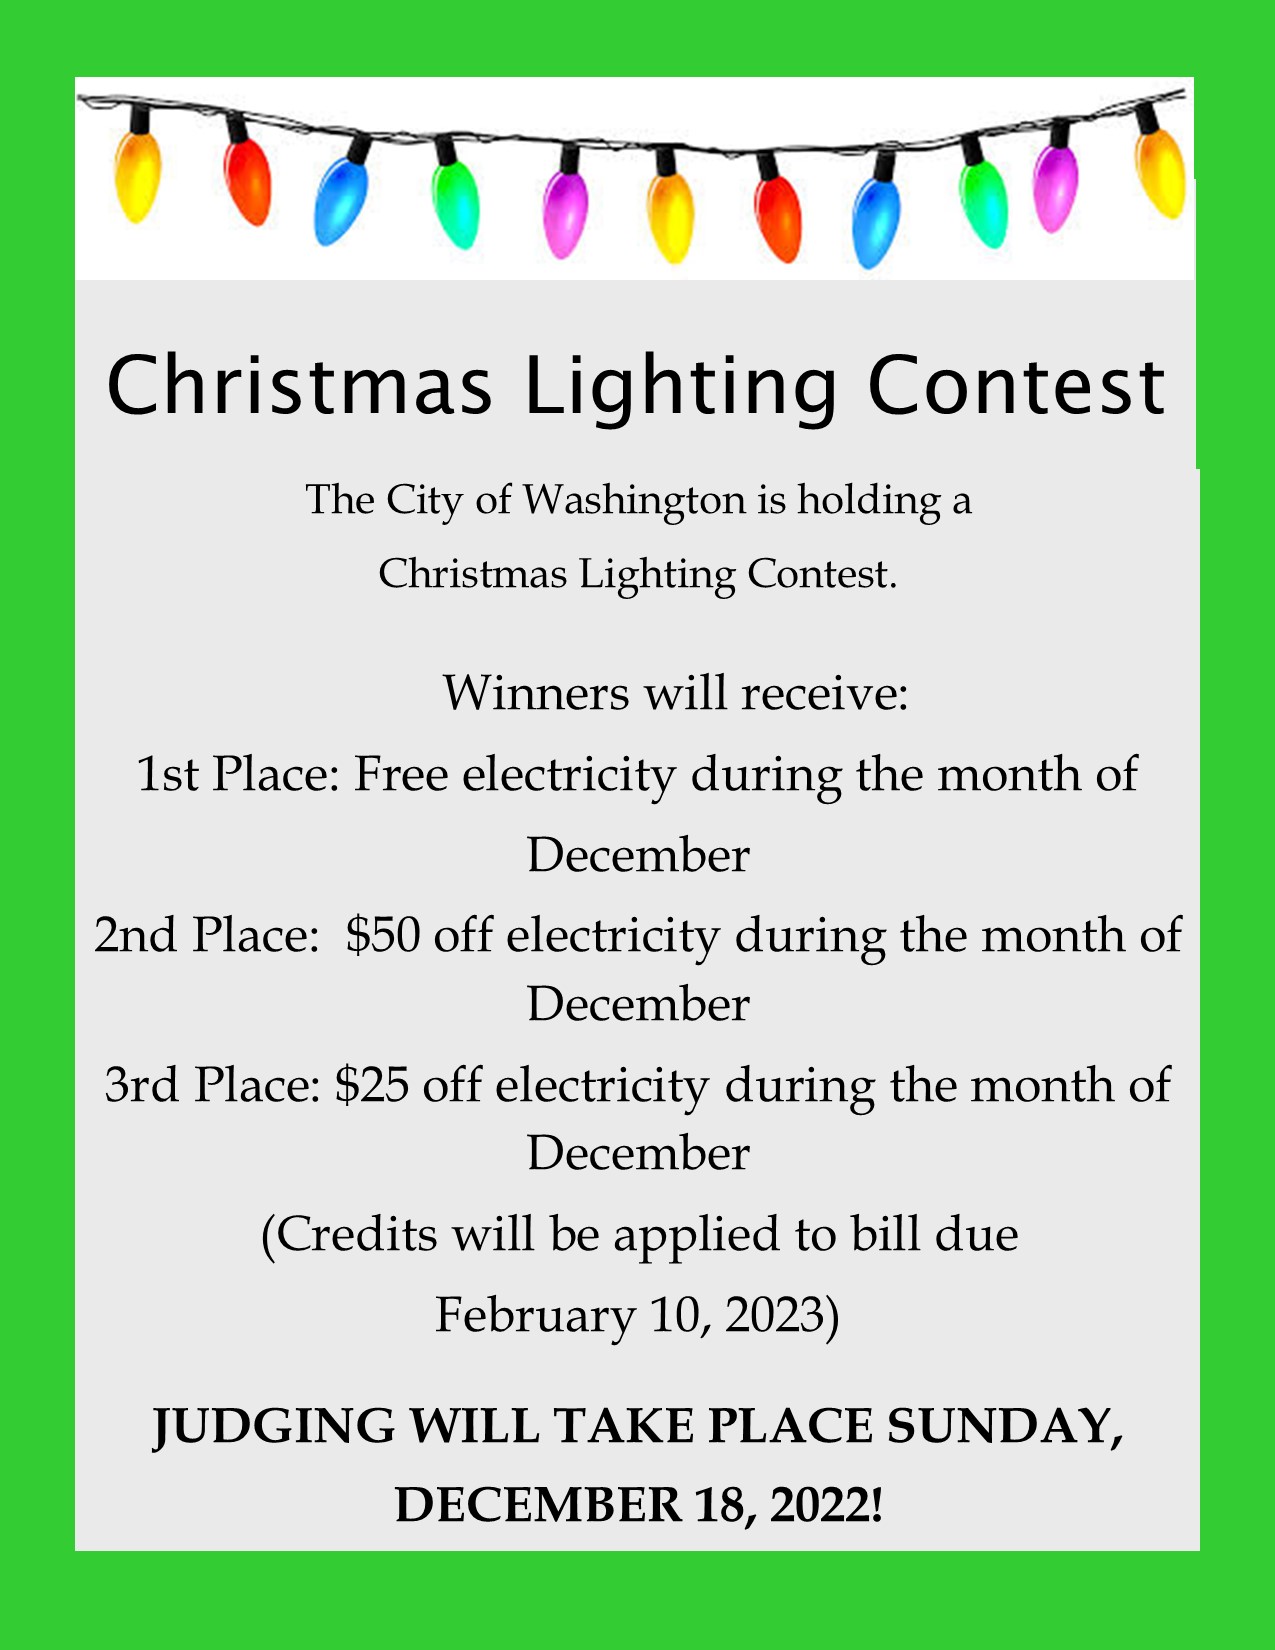 Lighting contest